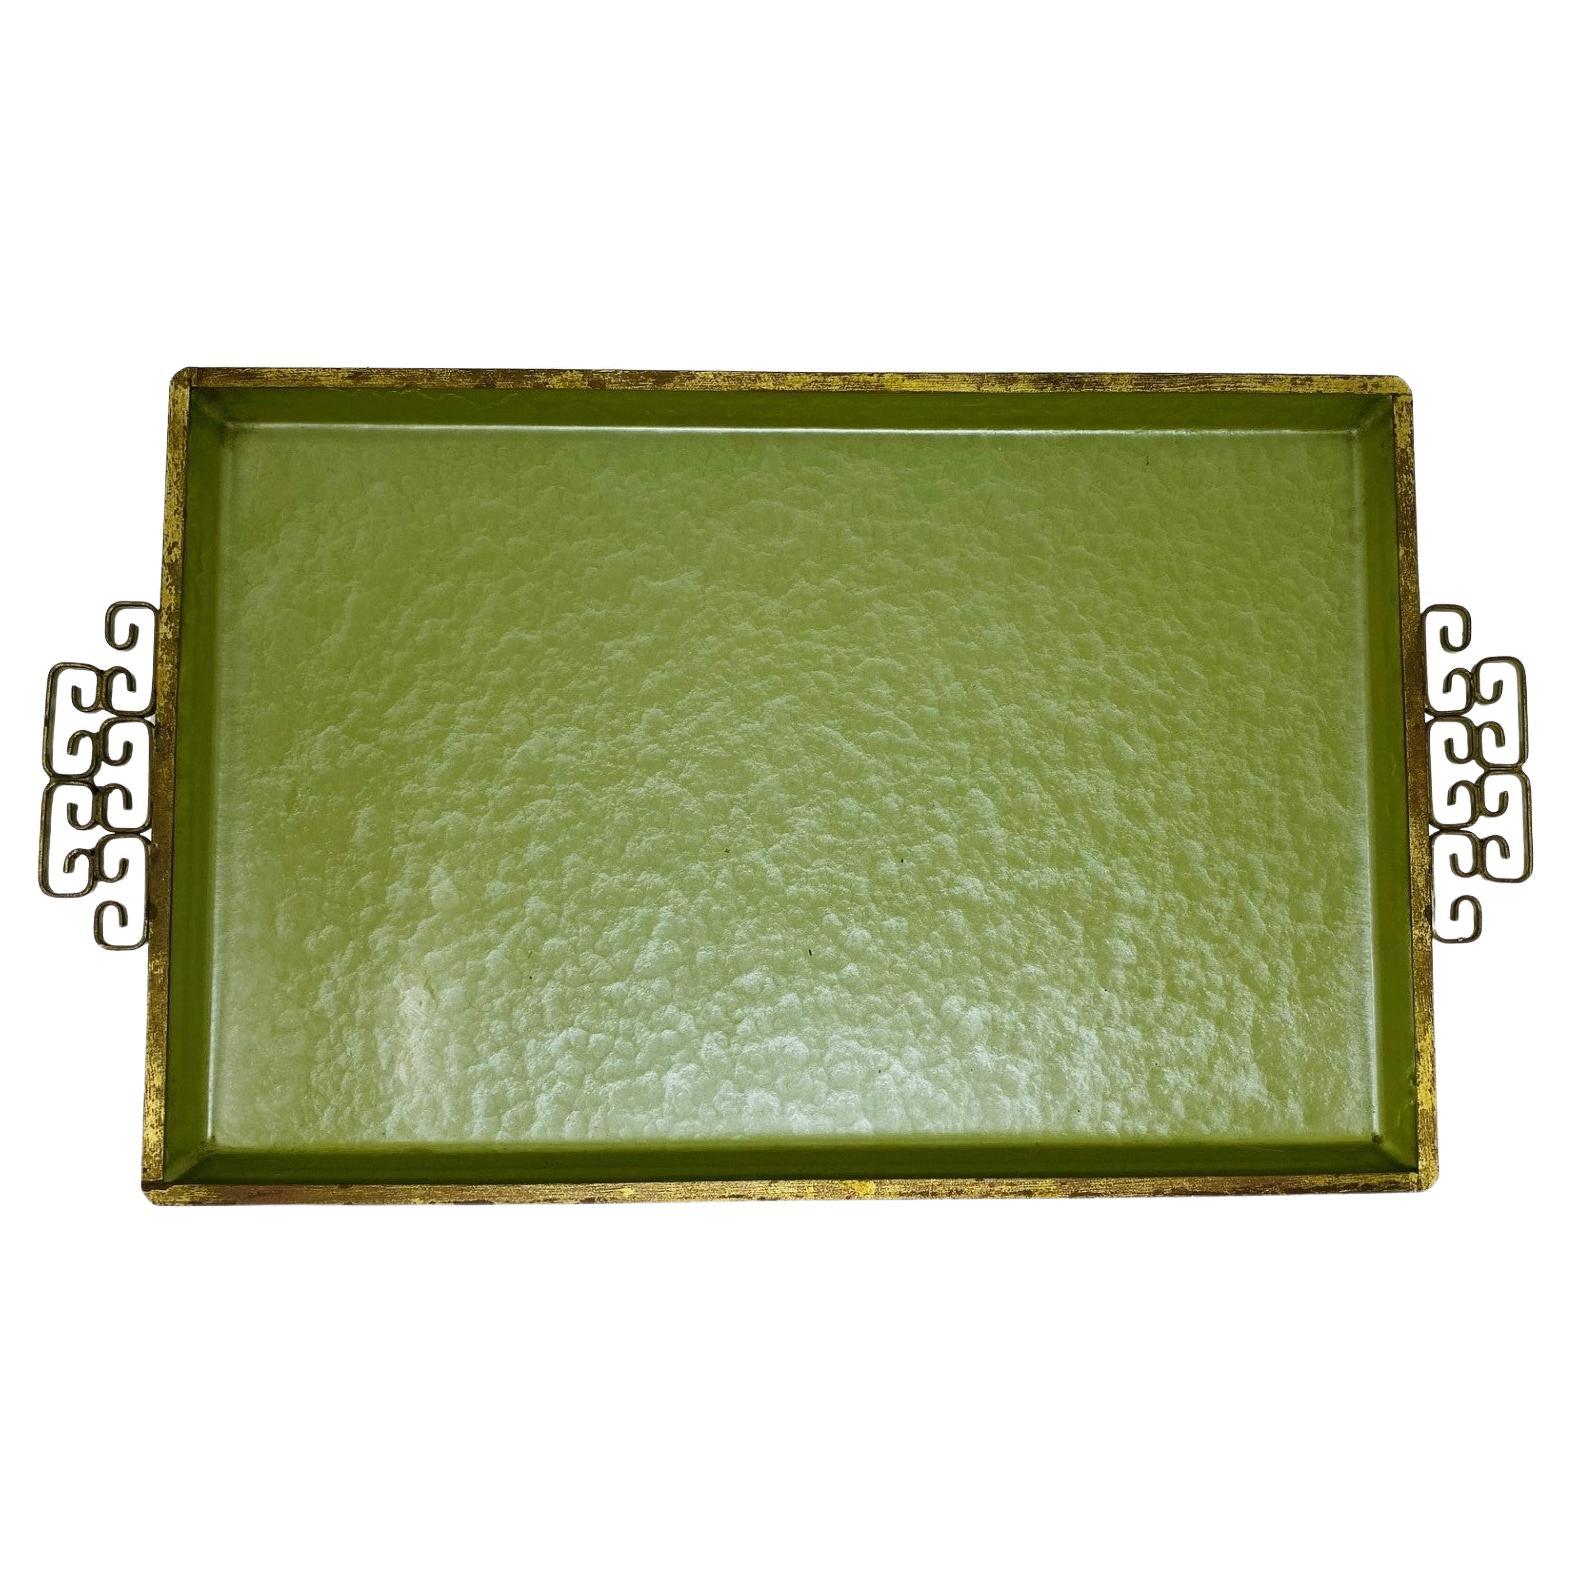 Vintage Mid Century Kyes Moire' Glaze Messing und Emaille Grün Tablett 1960s